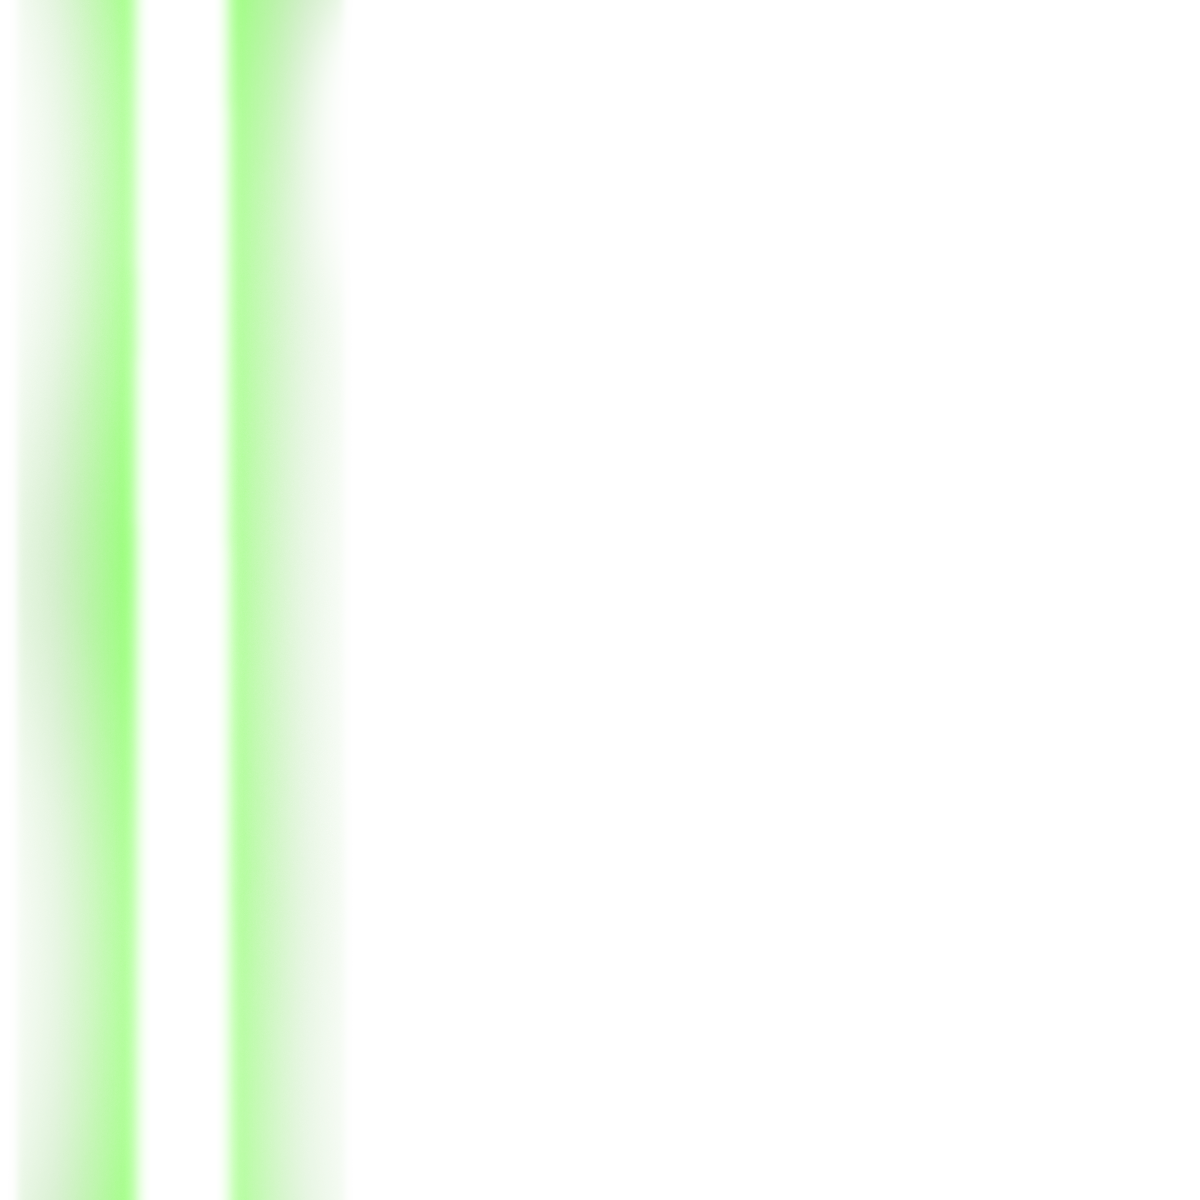 Unofficial Star Wars Green Lightsaber Filter